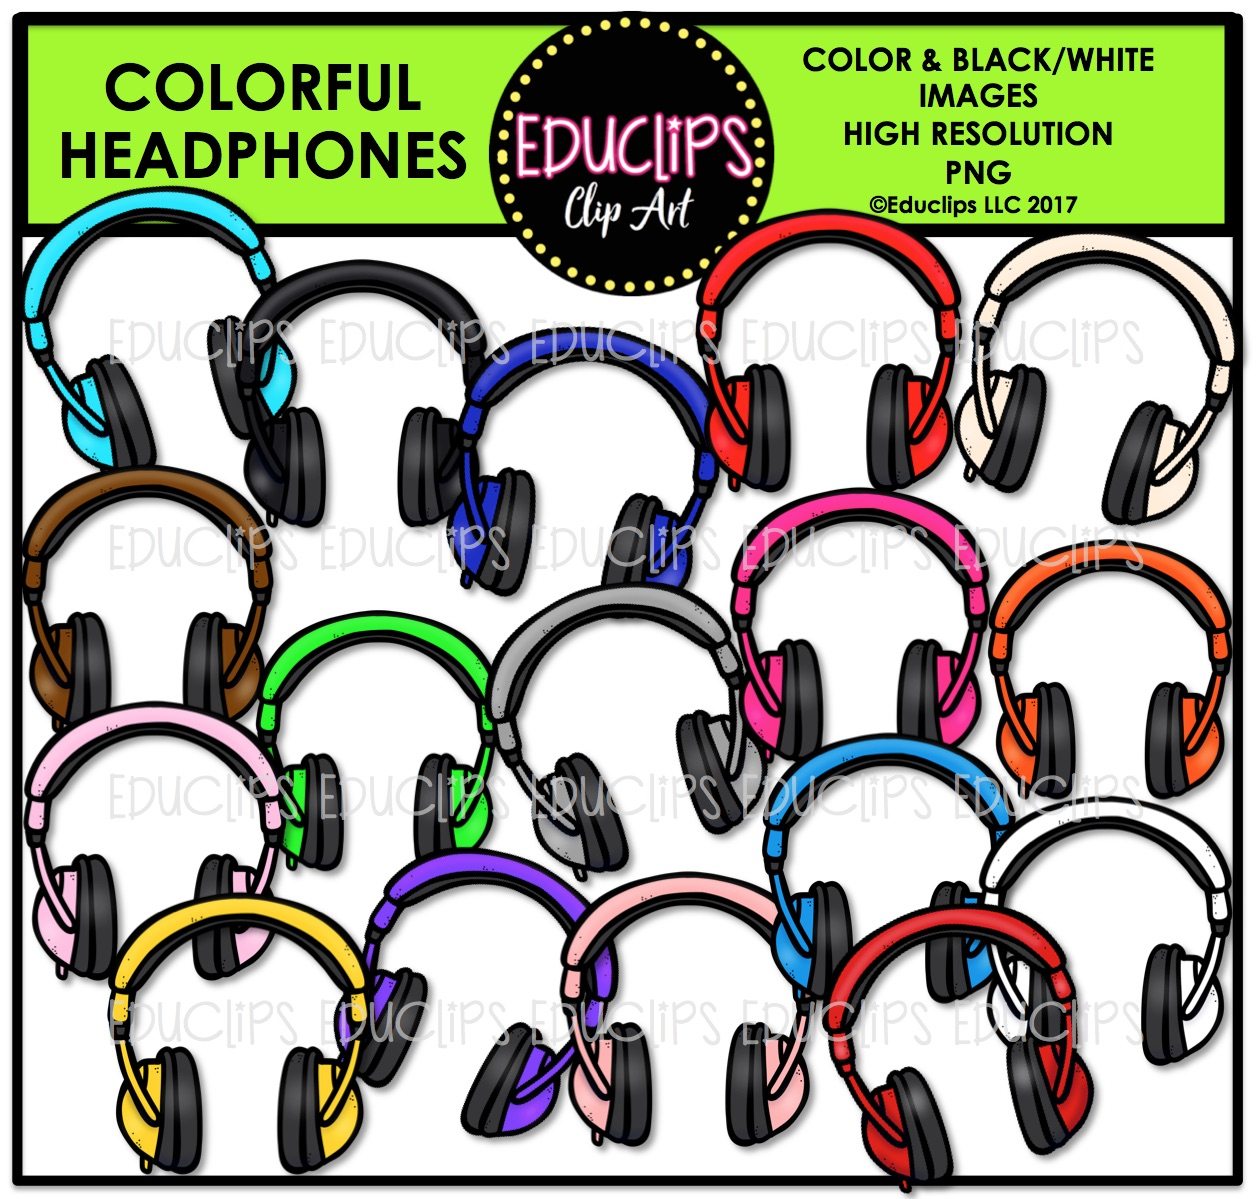 headphones clipart colorful